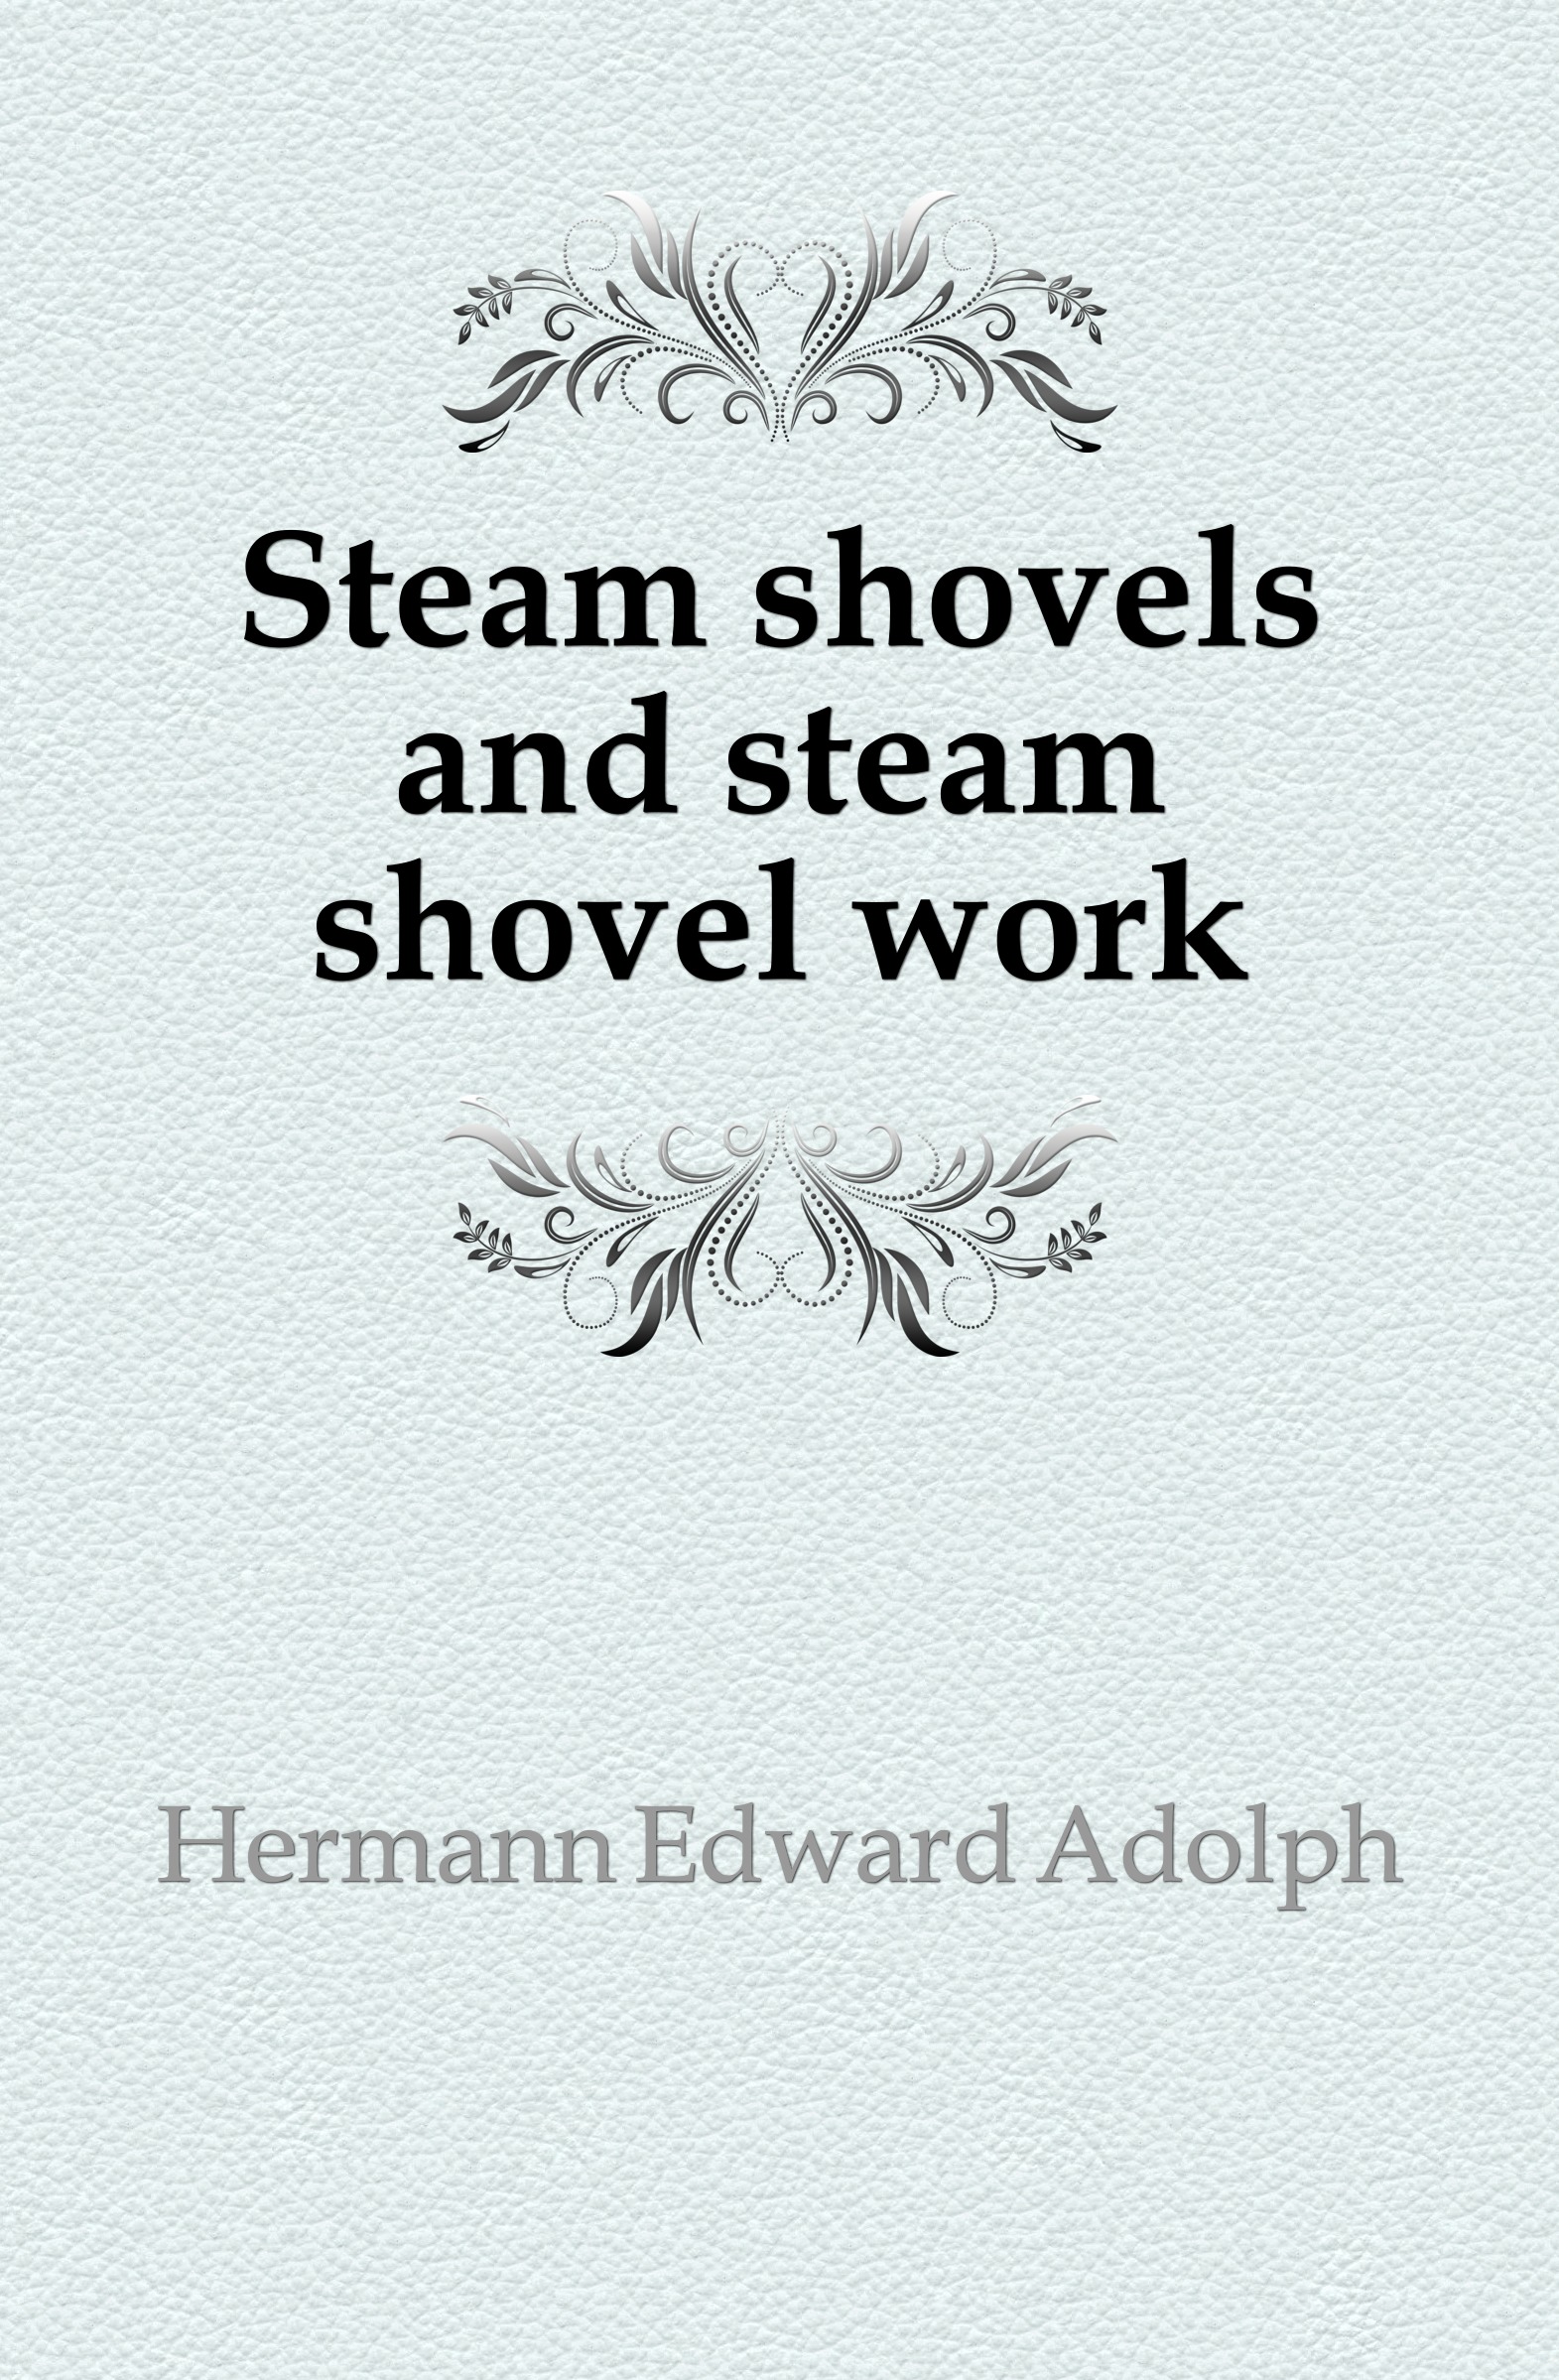 The steam shovel фото 20